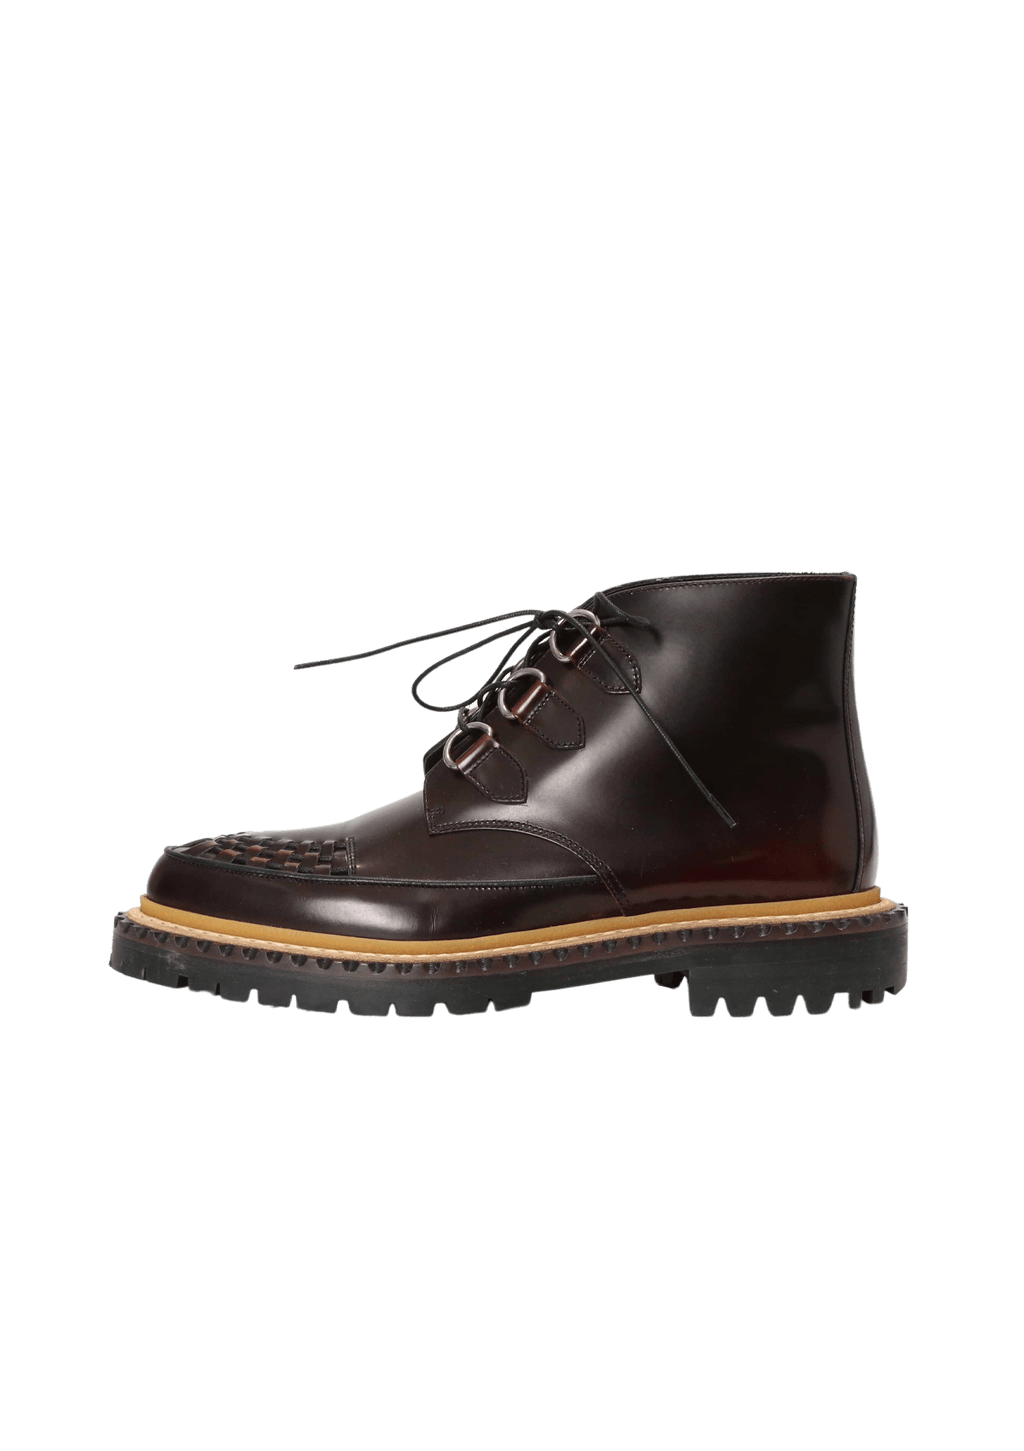 Bota Burberry Leather Combat Boots Marrom Original – Gringa